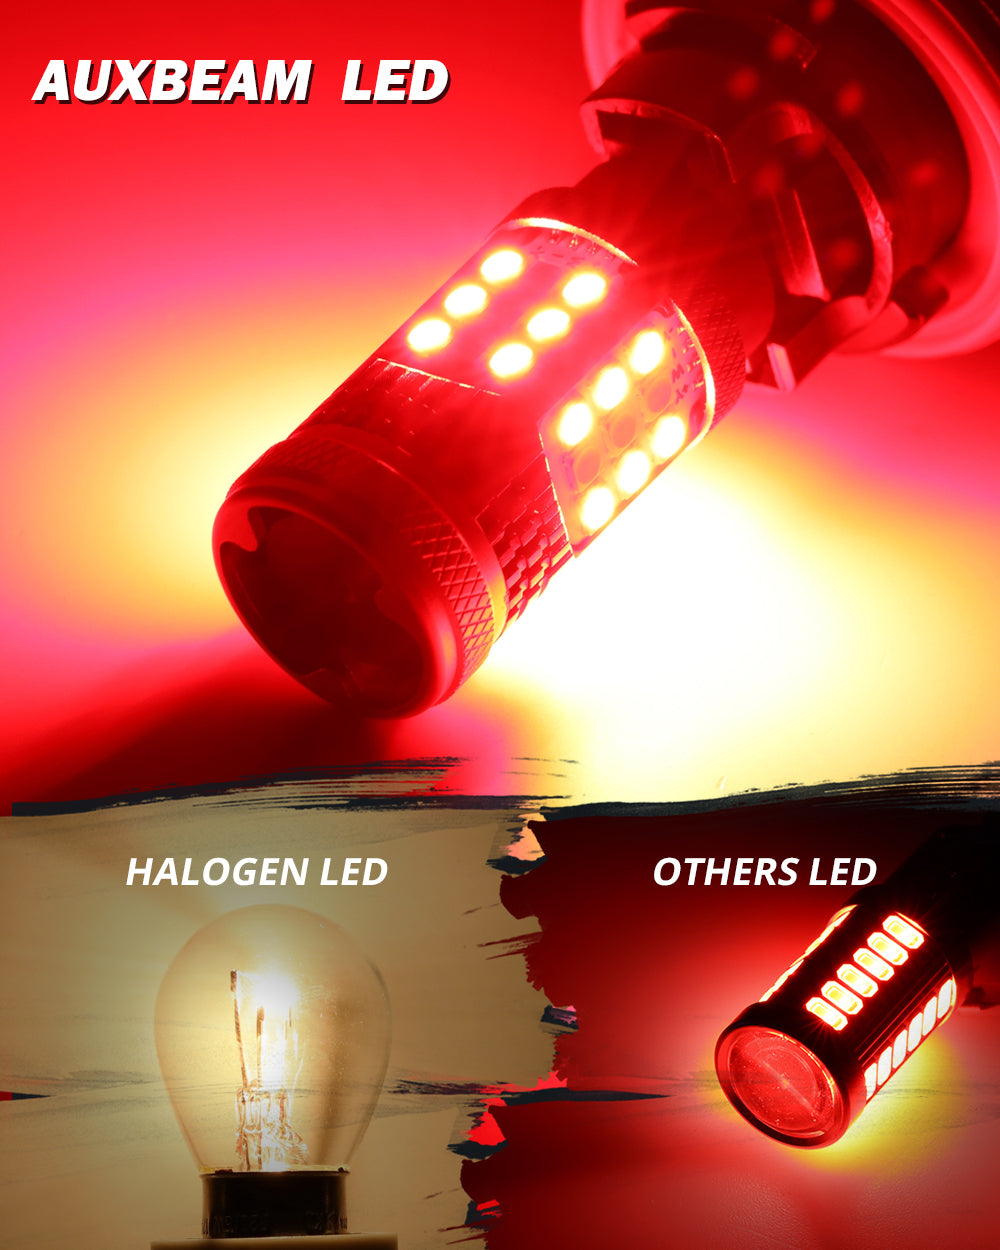 T25 3157 3156 LED Brake/Tail Light Bulbs 56W 600% High Brightness CAN-Bus Error Free Red Strobe Flashing B21 Series Strobe | 2 Bulbs